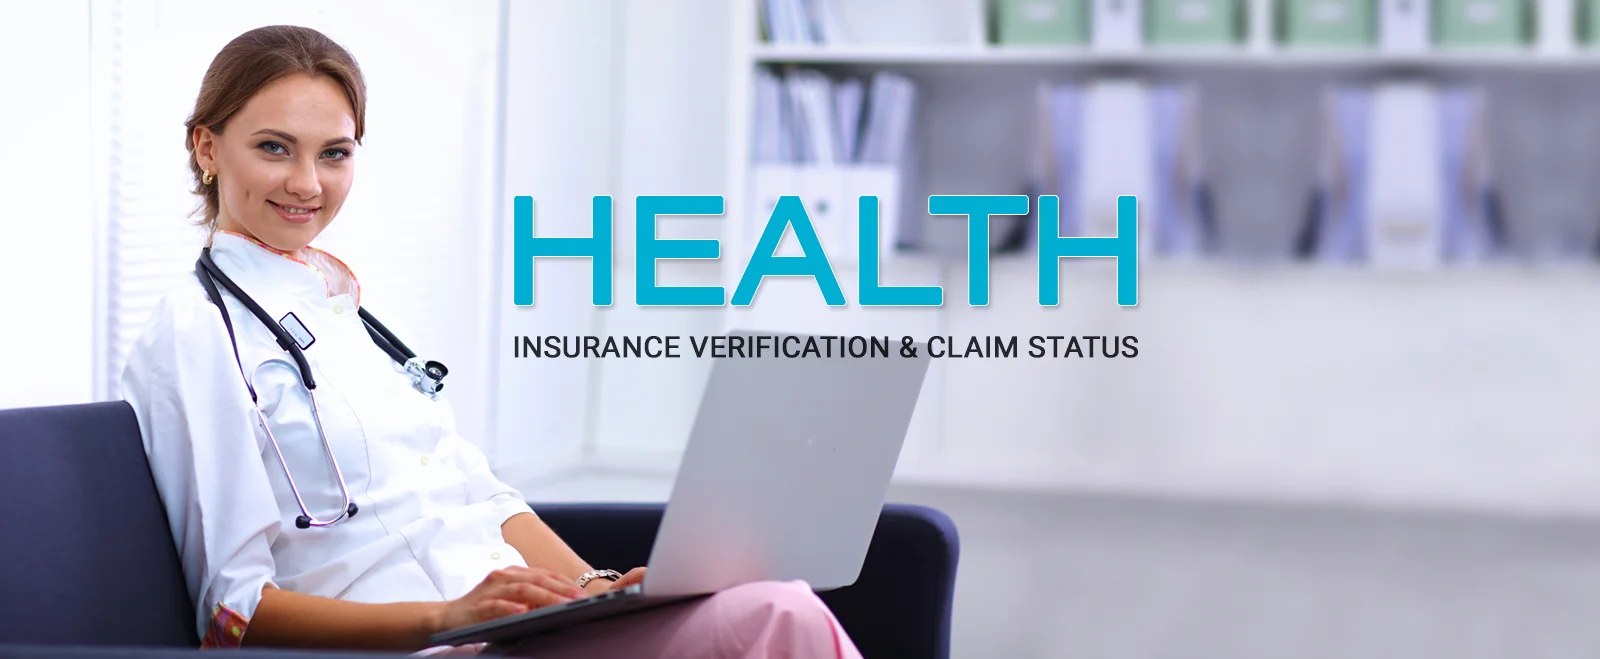 Health Insurance Verification & Claim Status